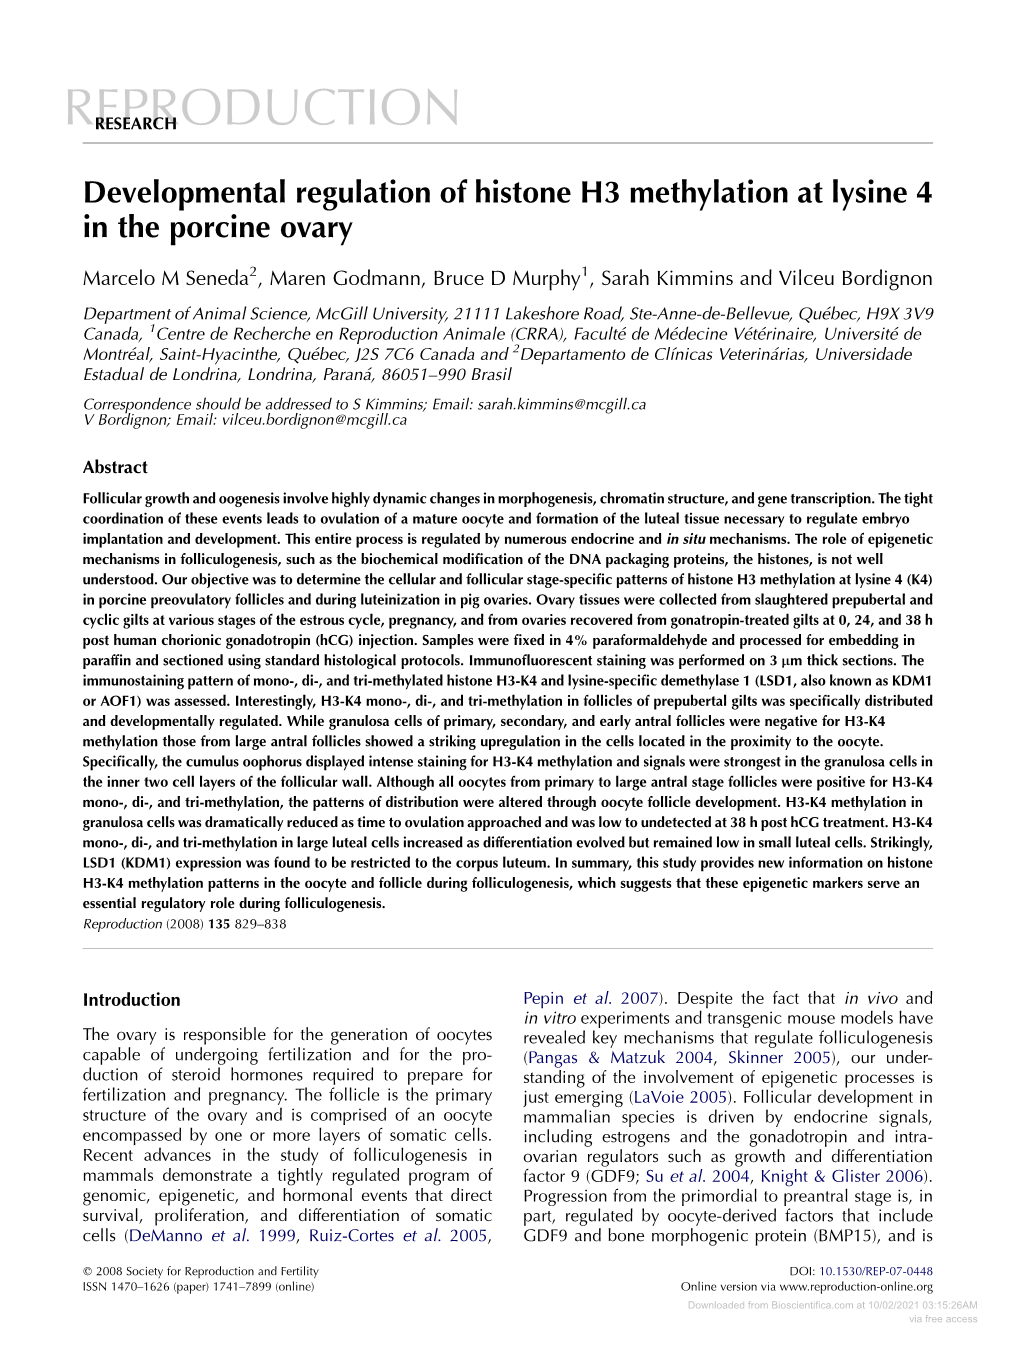 Developmental Regulation of Histone H3 Methylation at Lysine 4 in the Porcine Ovary